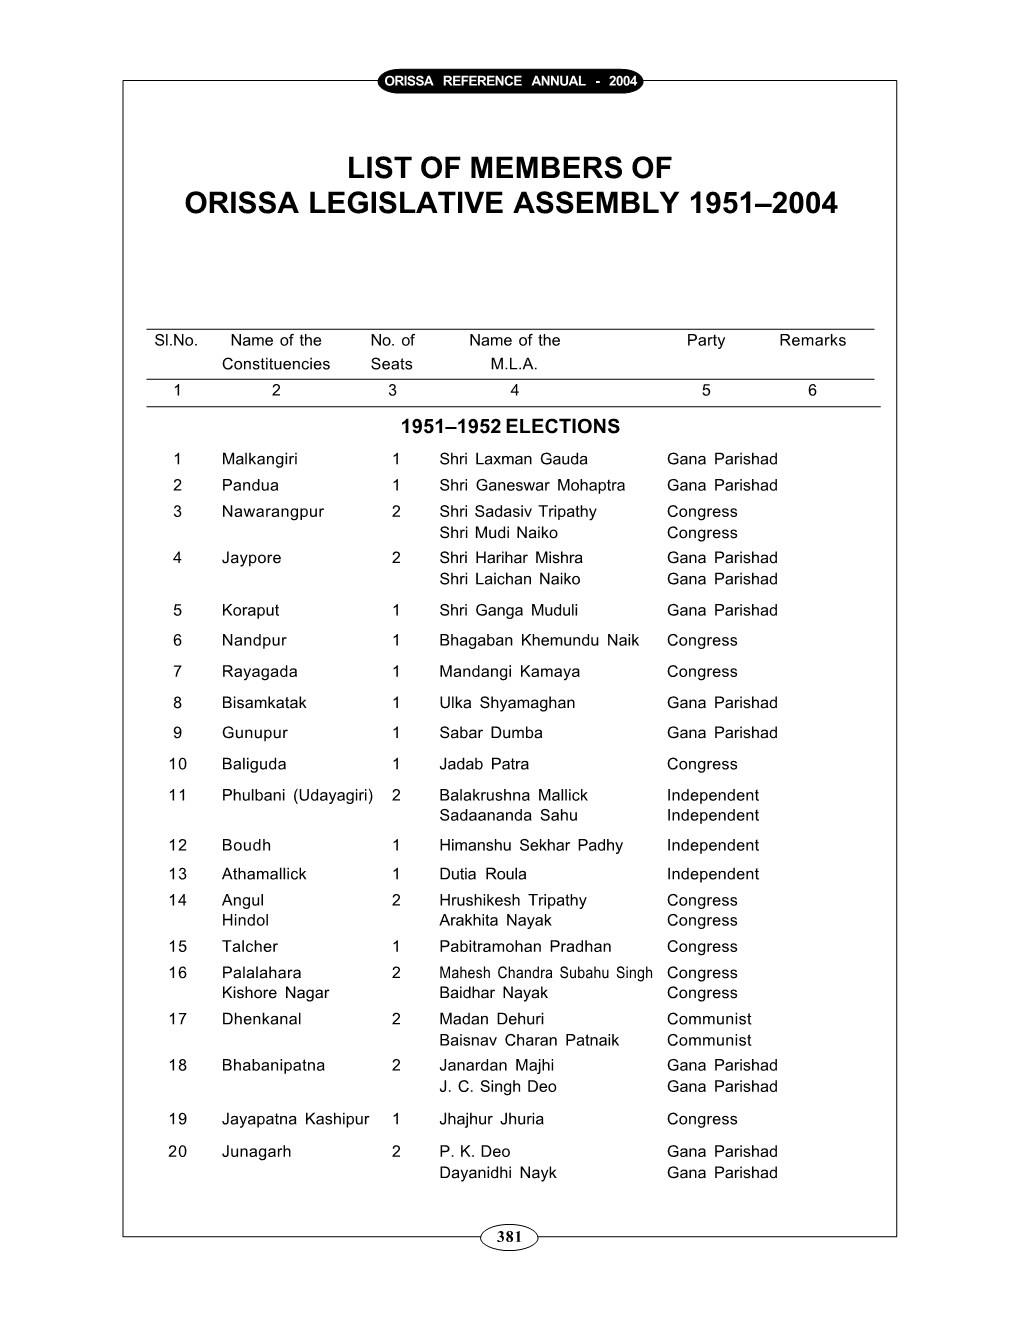 List of Members of Orissa Legislative Assembly 1951–2004